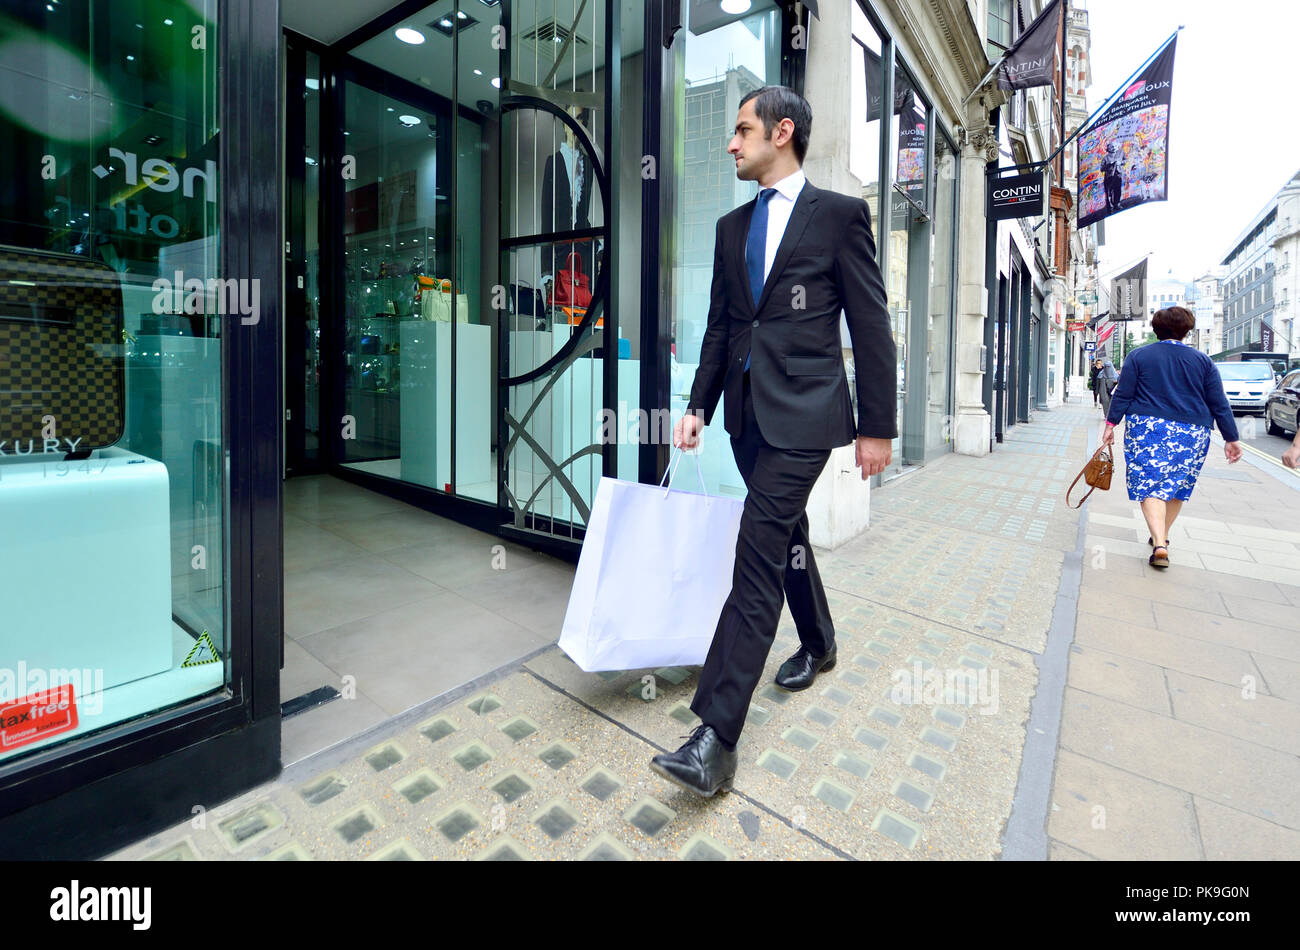 Well-dressed man shopping in New Bond Street, London, England, UK. Stock Photo